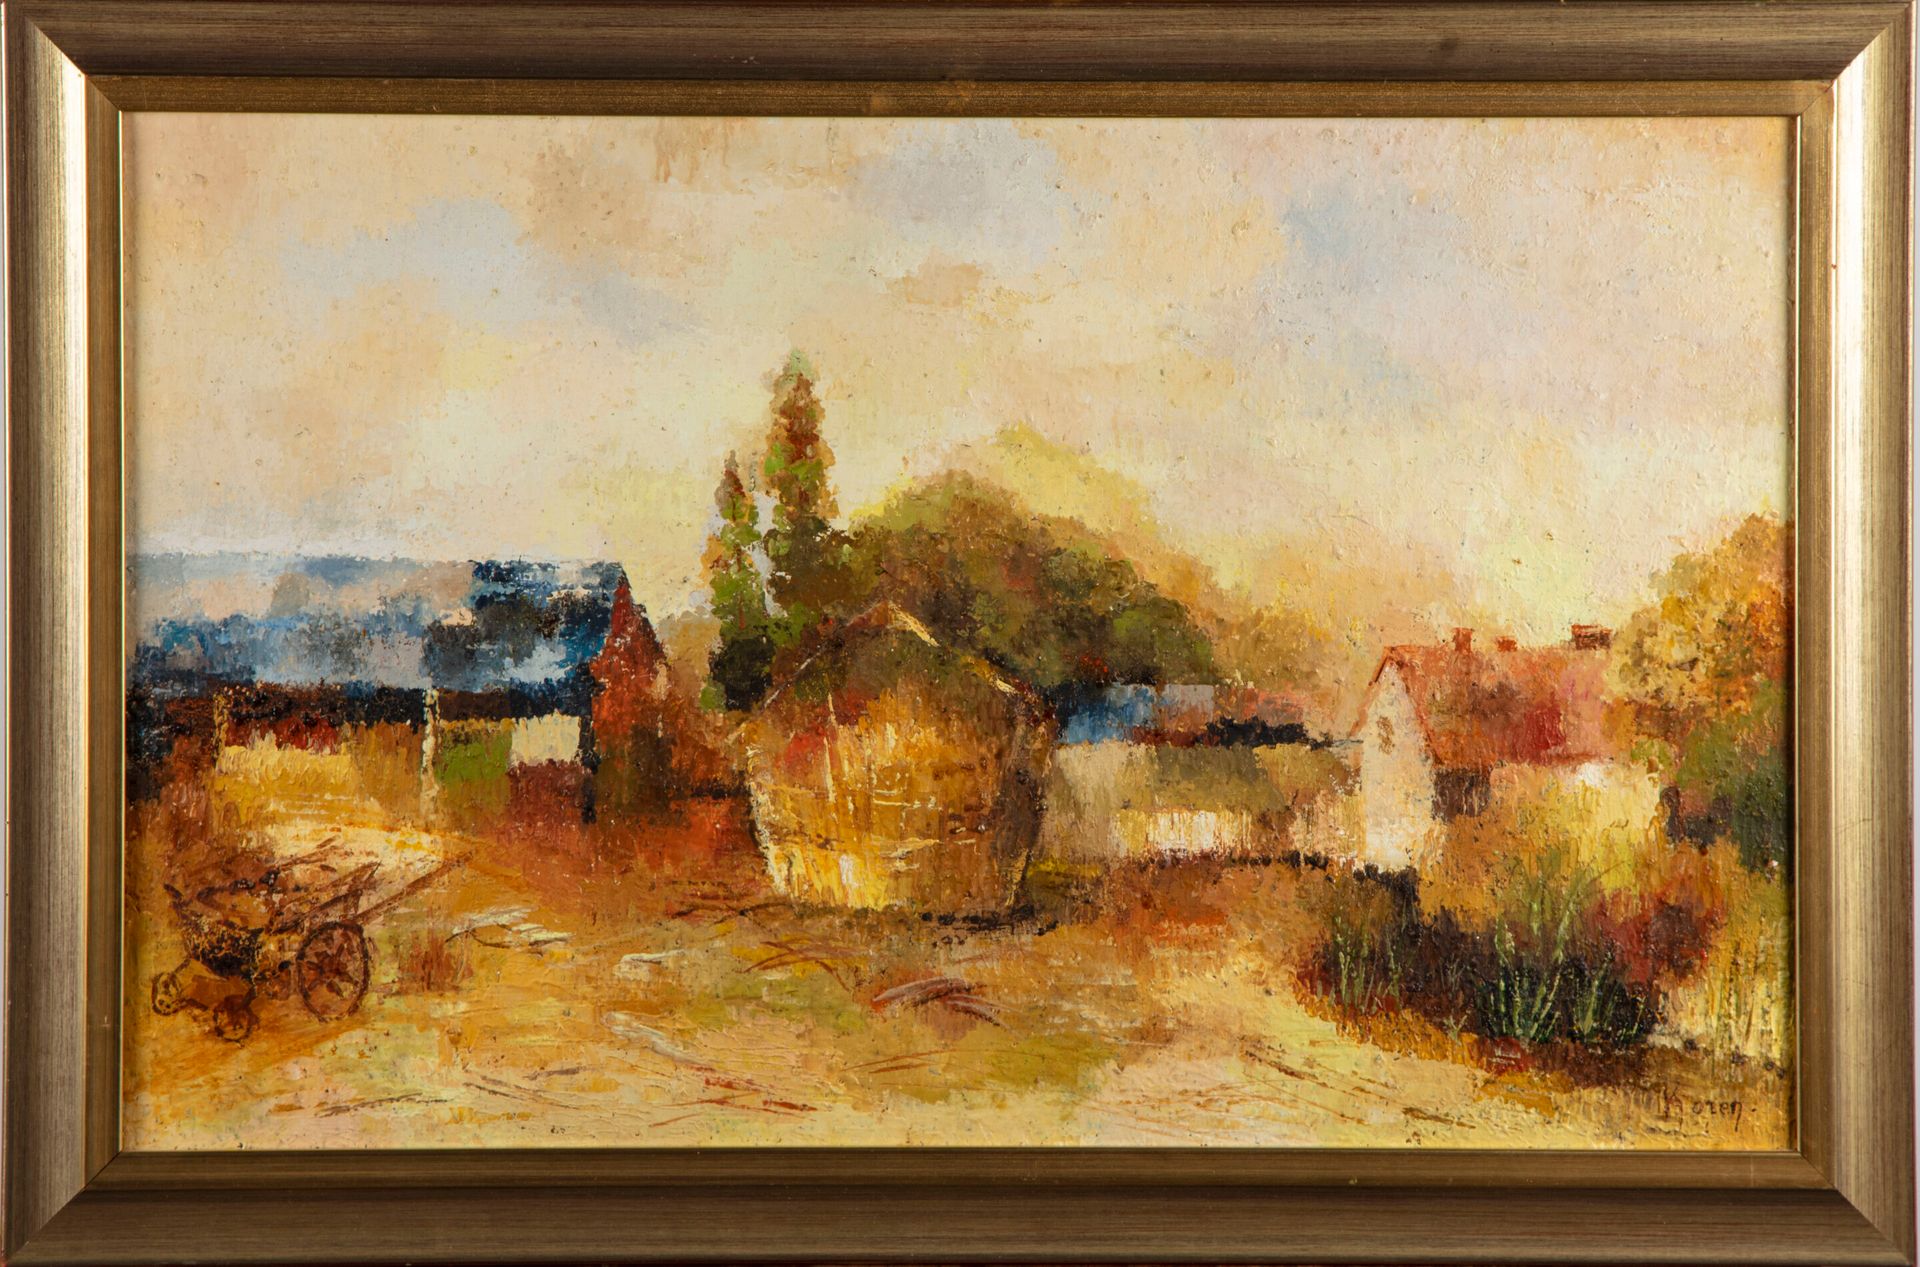 Null KOREN (20岁)

村庄景观

布面油画，右下方有签名

61 x 38 cm